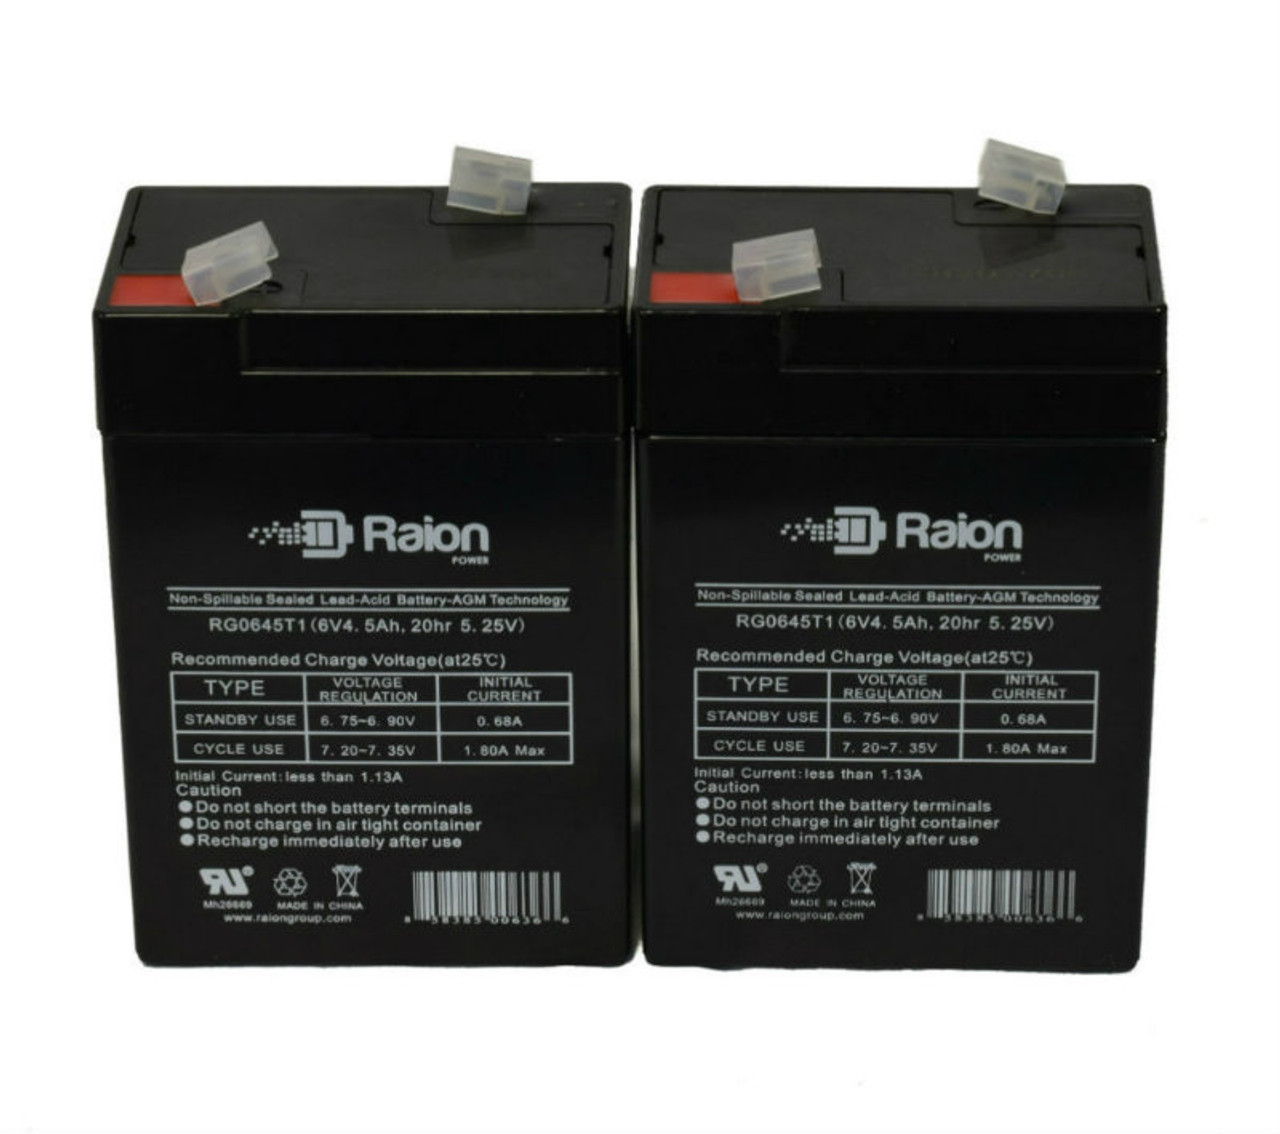 Raion Power RG0645T1 6V 4.5Ah Replacement Medical Equipment Battery for Nellcor Pulse Oximeter N1000 - 2 Pack